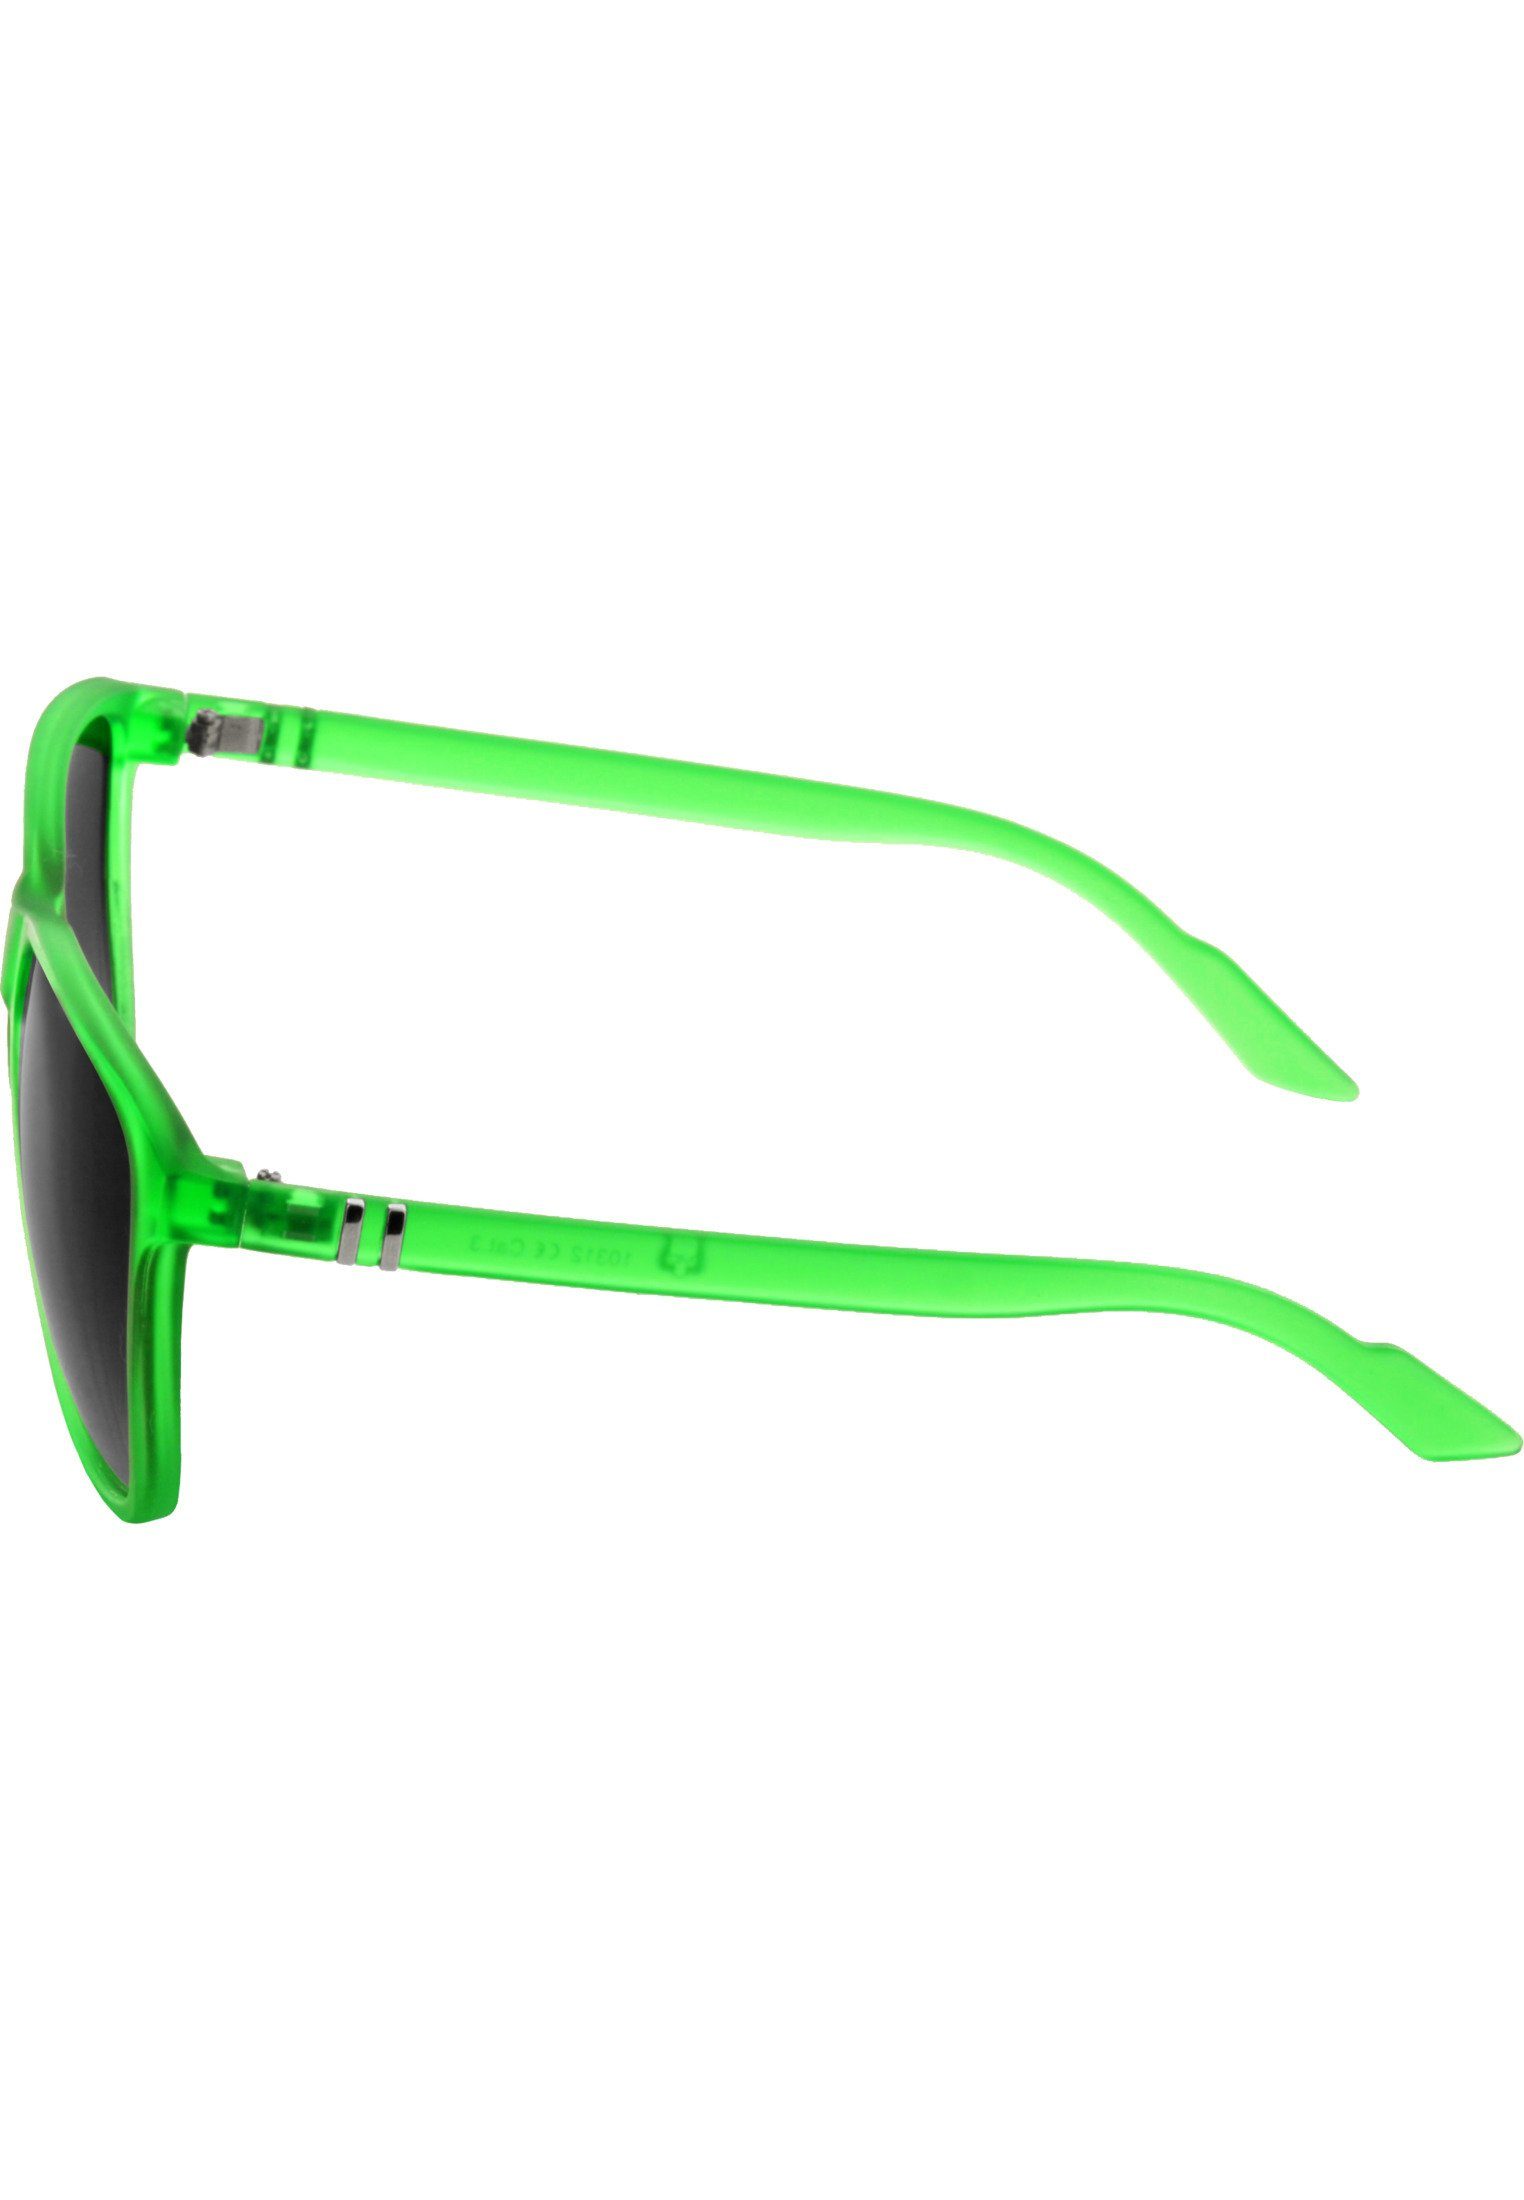 Sonnenbrille Chirwa Sunglasses Accessoires neongreen MSTRDS